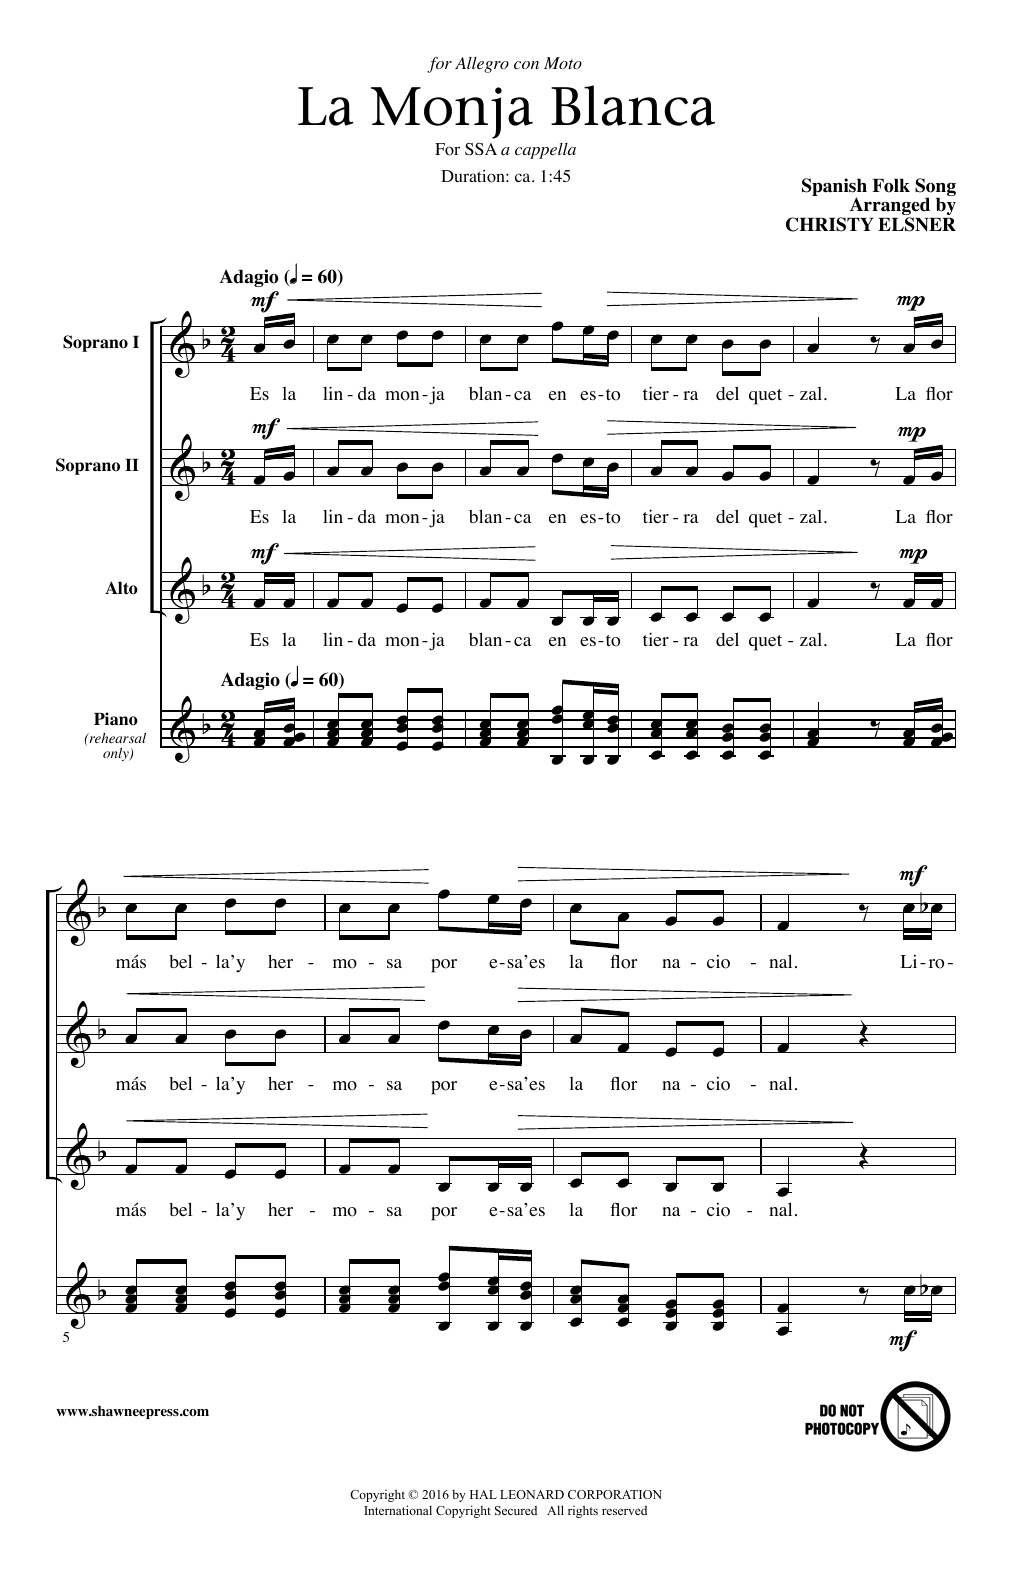 Spanish Folksong La Monja Blanca (arr. Christy Elsner) Sheet Music Notes & Chords for SSA - Download or Print PDF